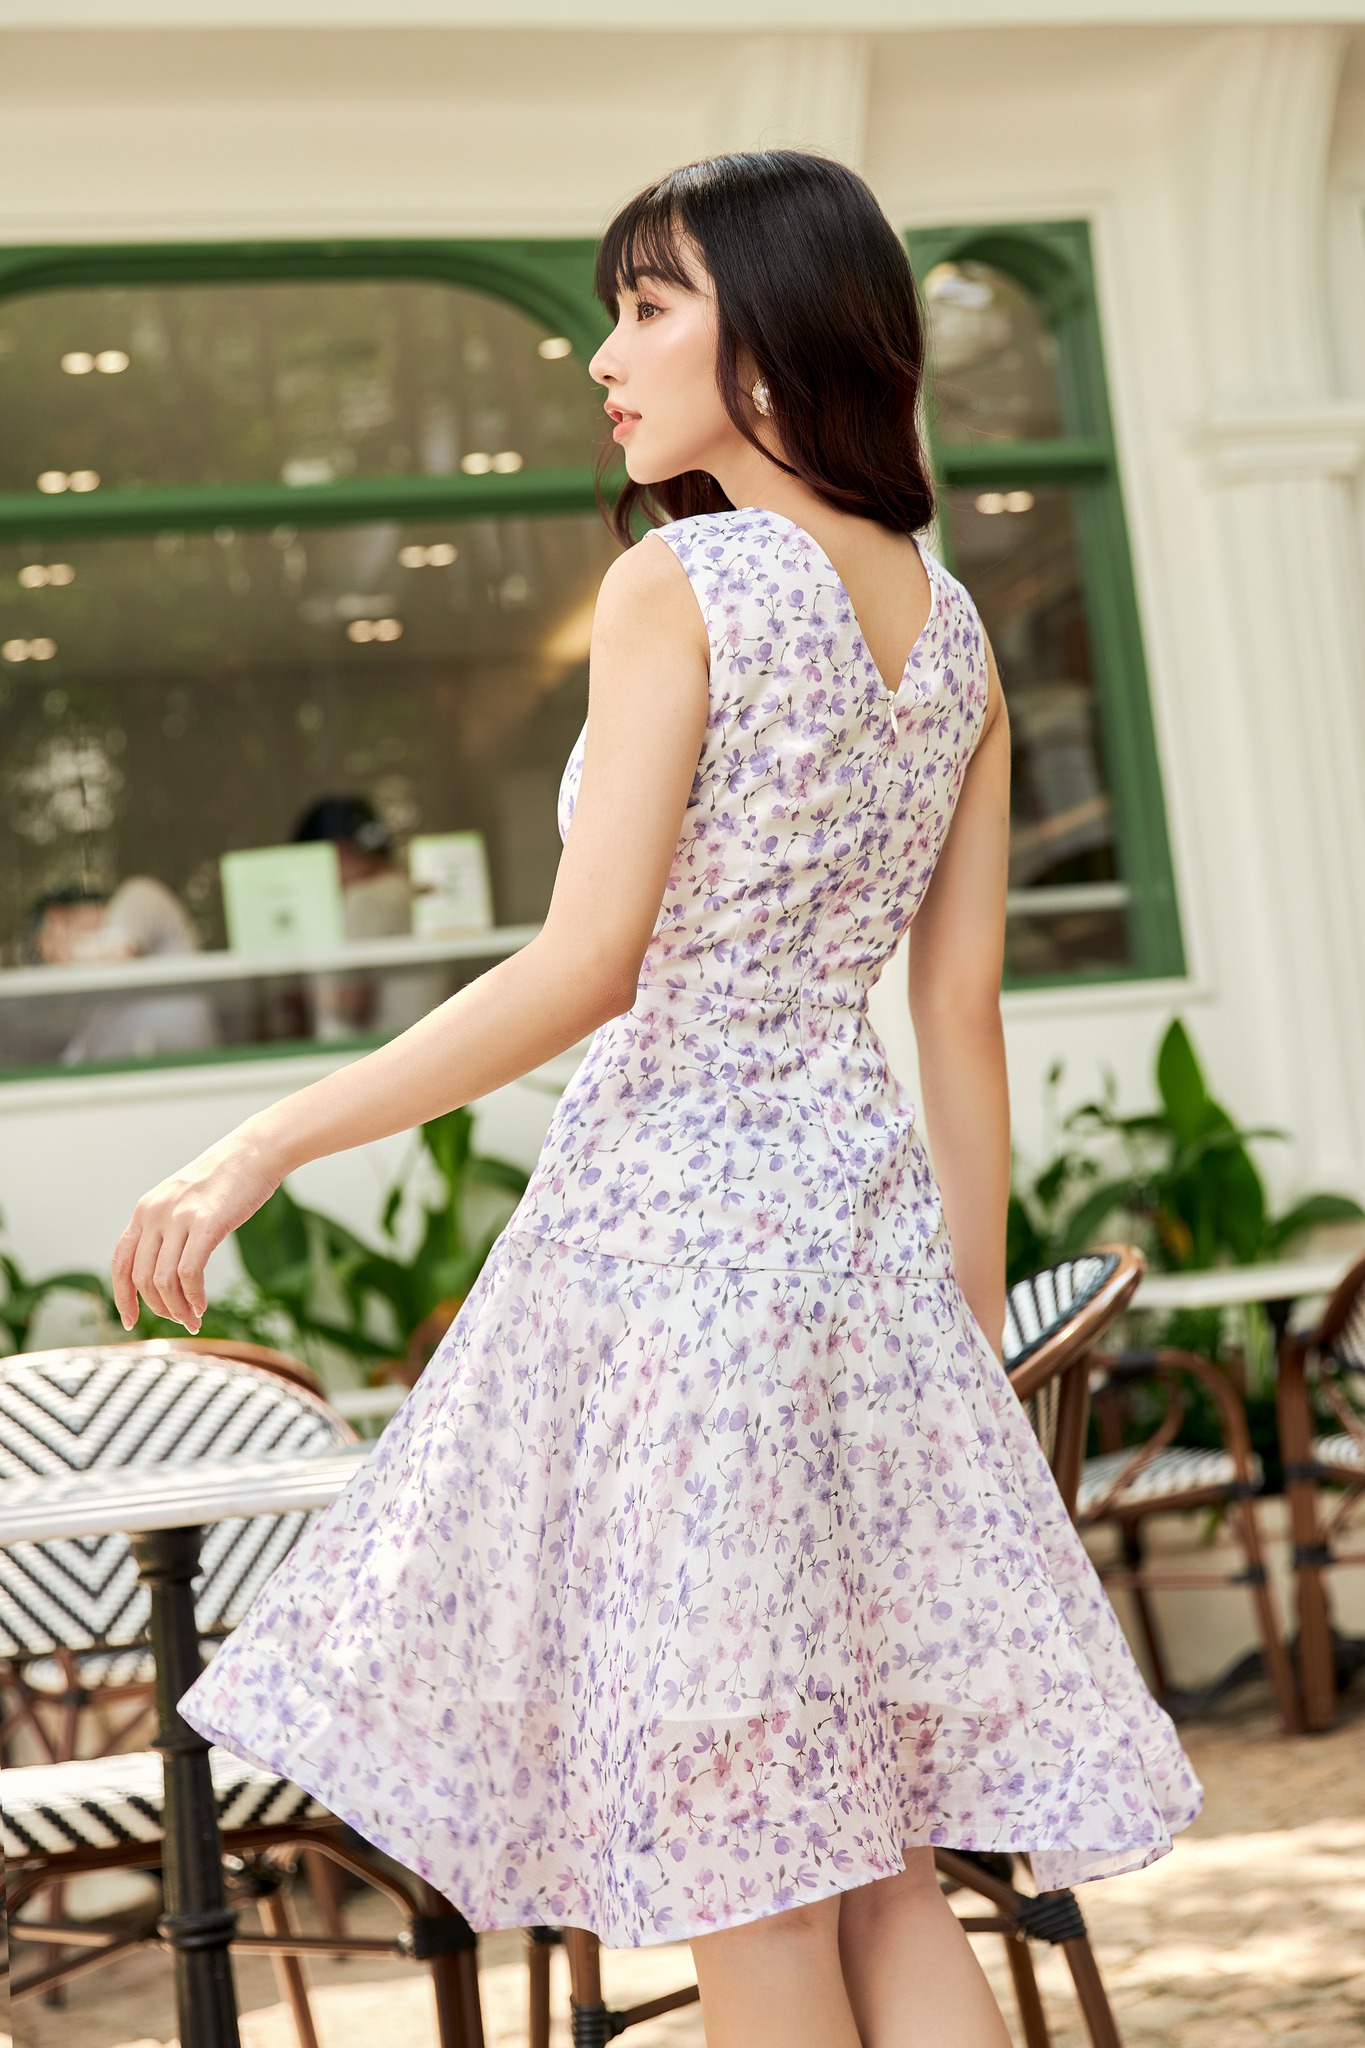 Chỉ 12/12 Sale upto 50% Voucher 15% OLV - Đầm Lavender Flower Dress